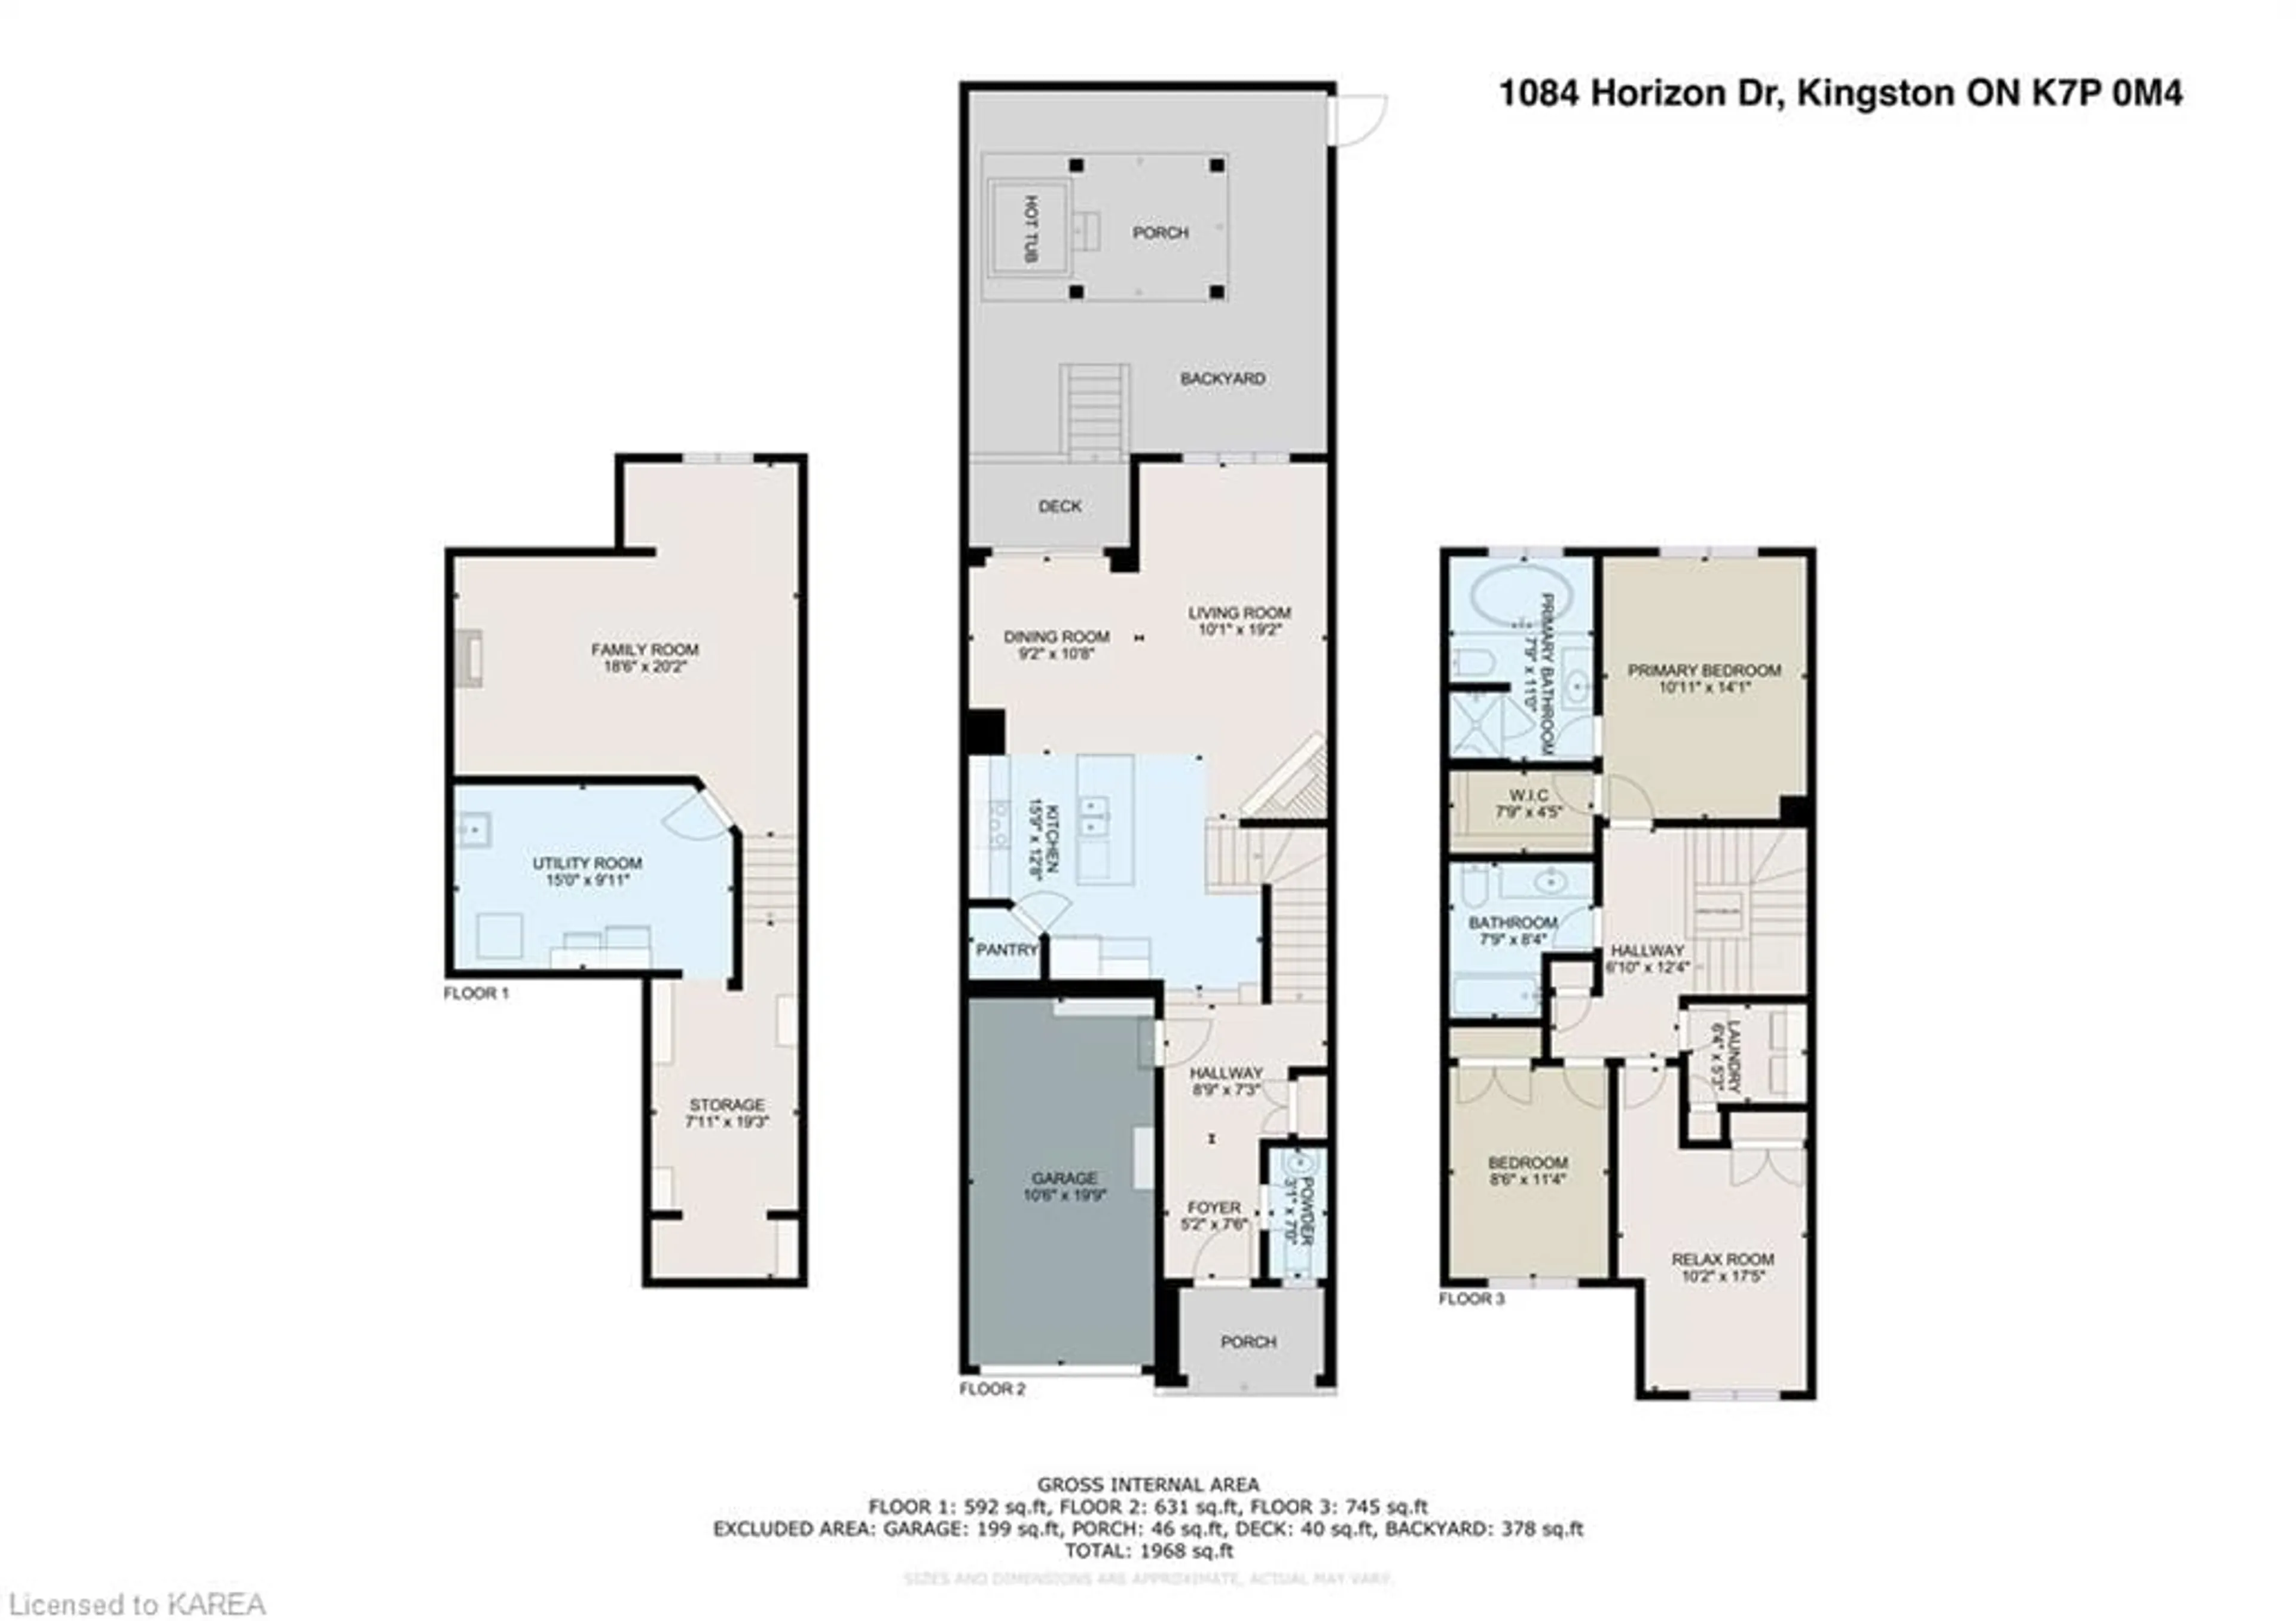 Floor plan for 1084 Horizon Dr, Kingston Ontario K7P 0M4